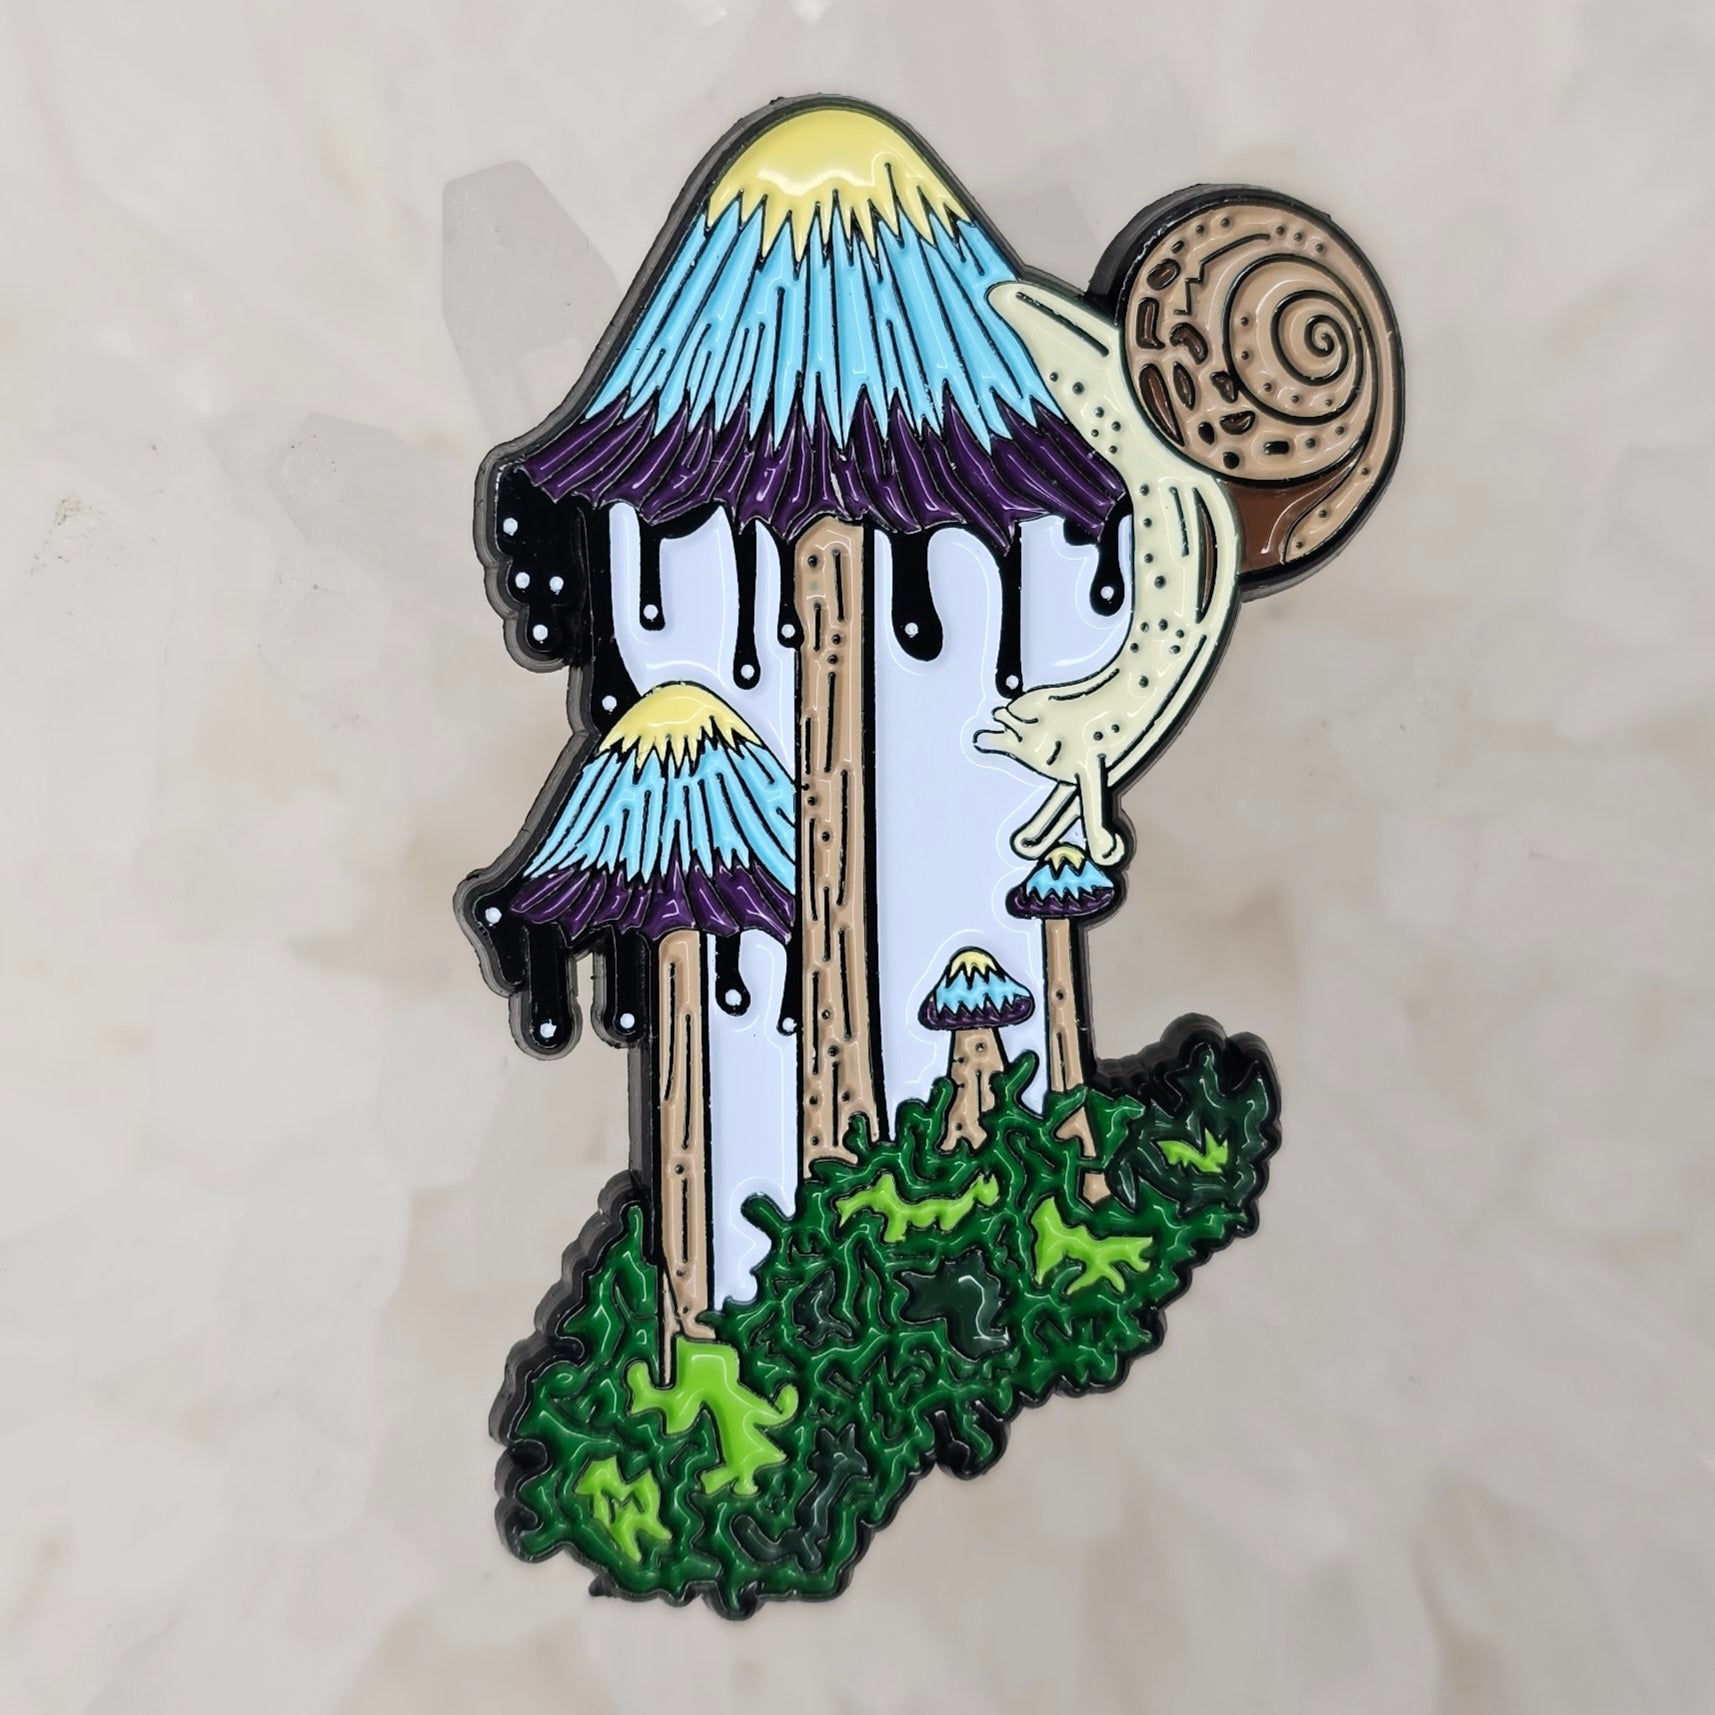 Inky Cap Mushroom Snail Melt Mycology Shroom Psychedelic Art Enamel Pin Hat Pin Lapel Pin Brooch Badge Festival Pin